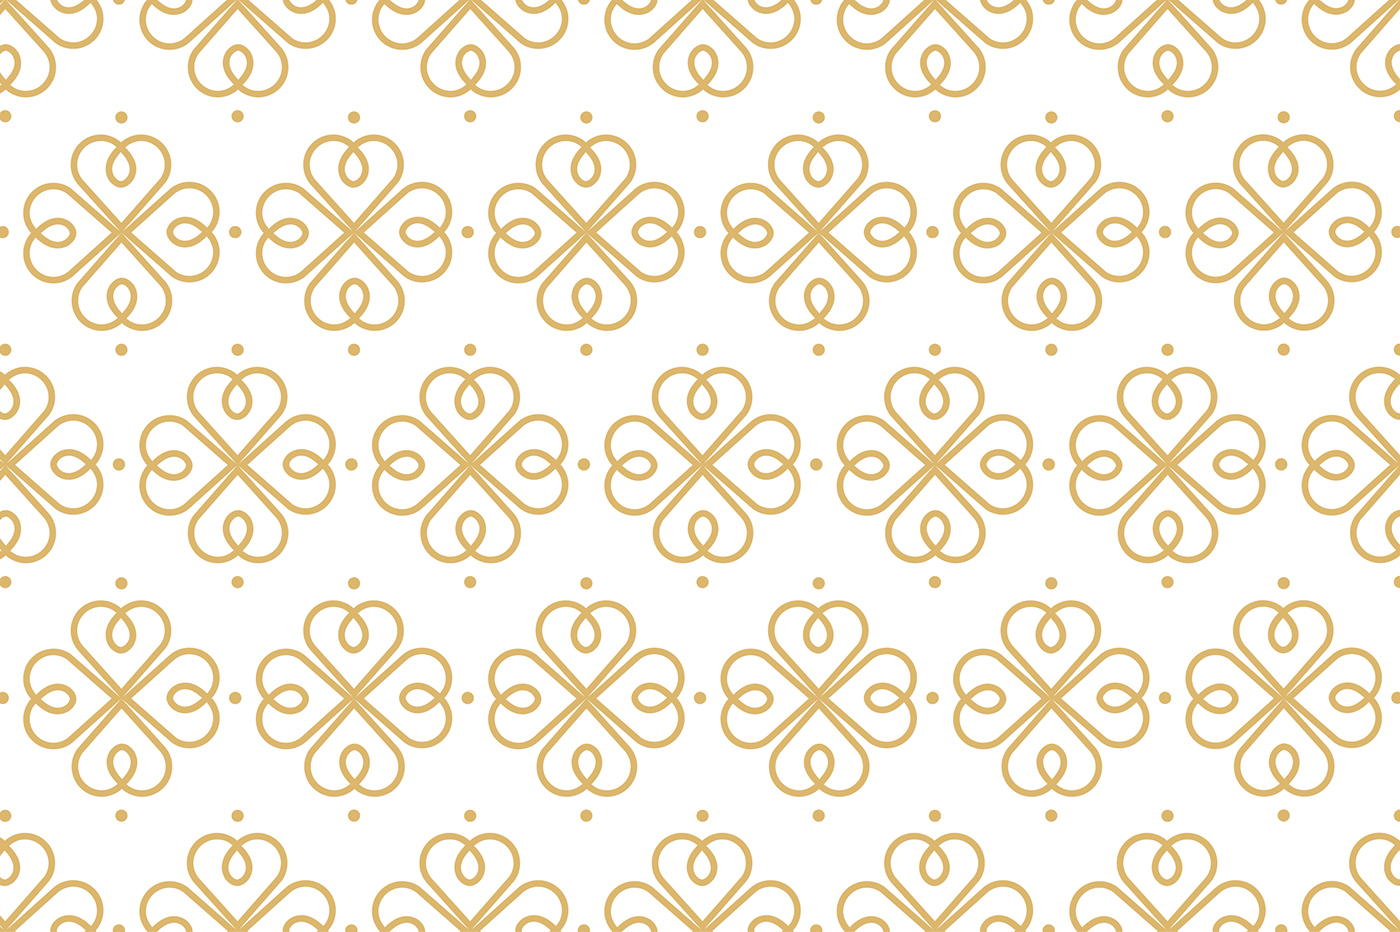 Patterns mosaic geometry handcraft copper foil gold identity Brand System ILLUSTRATION 